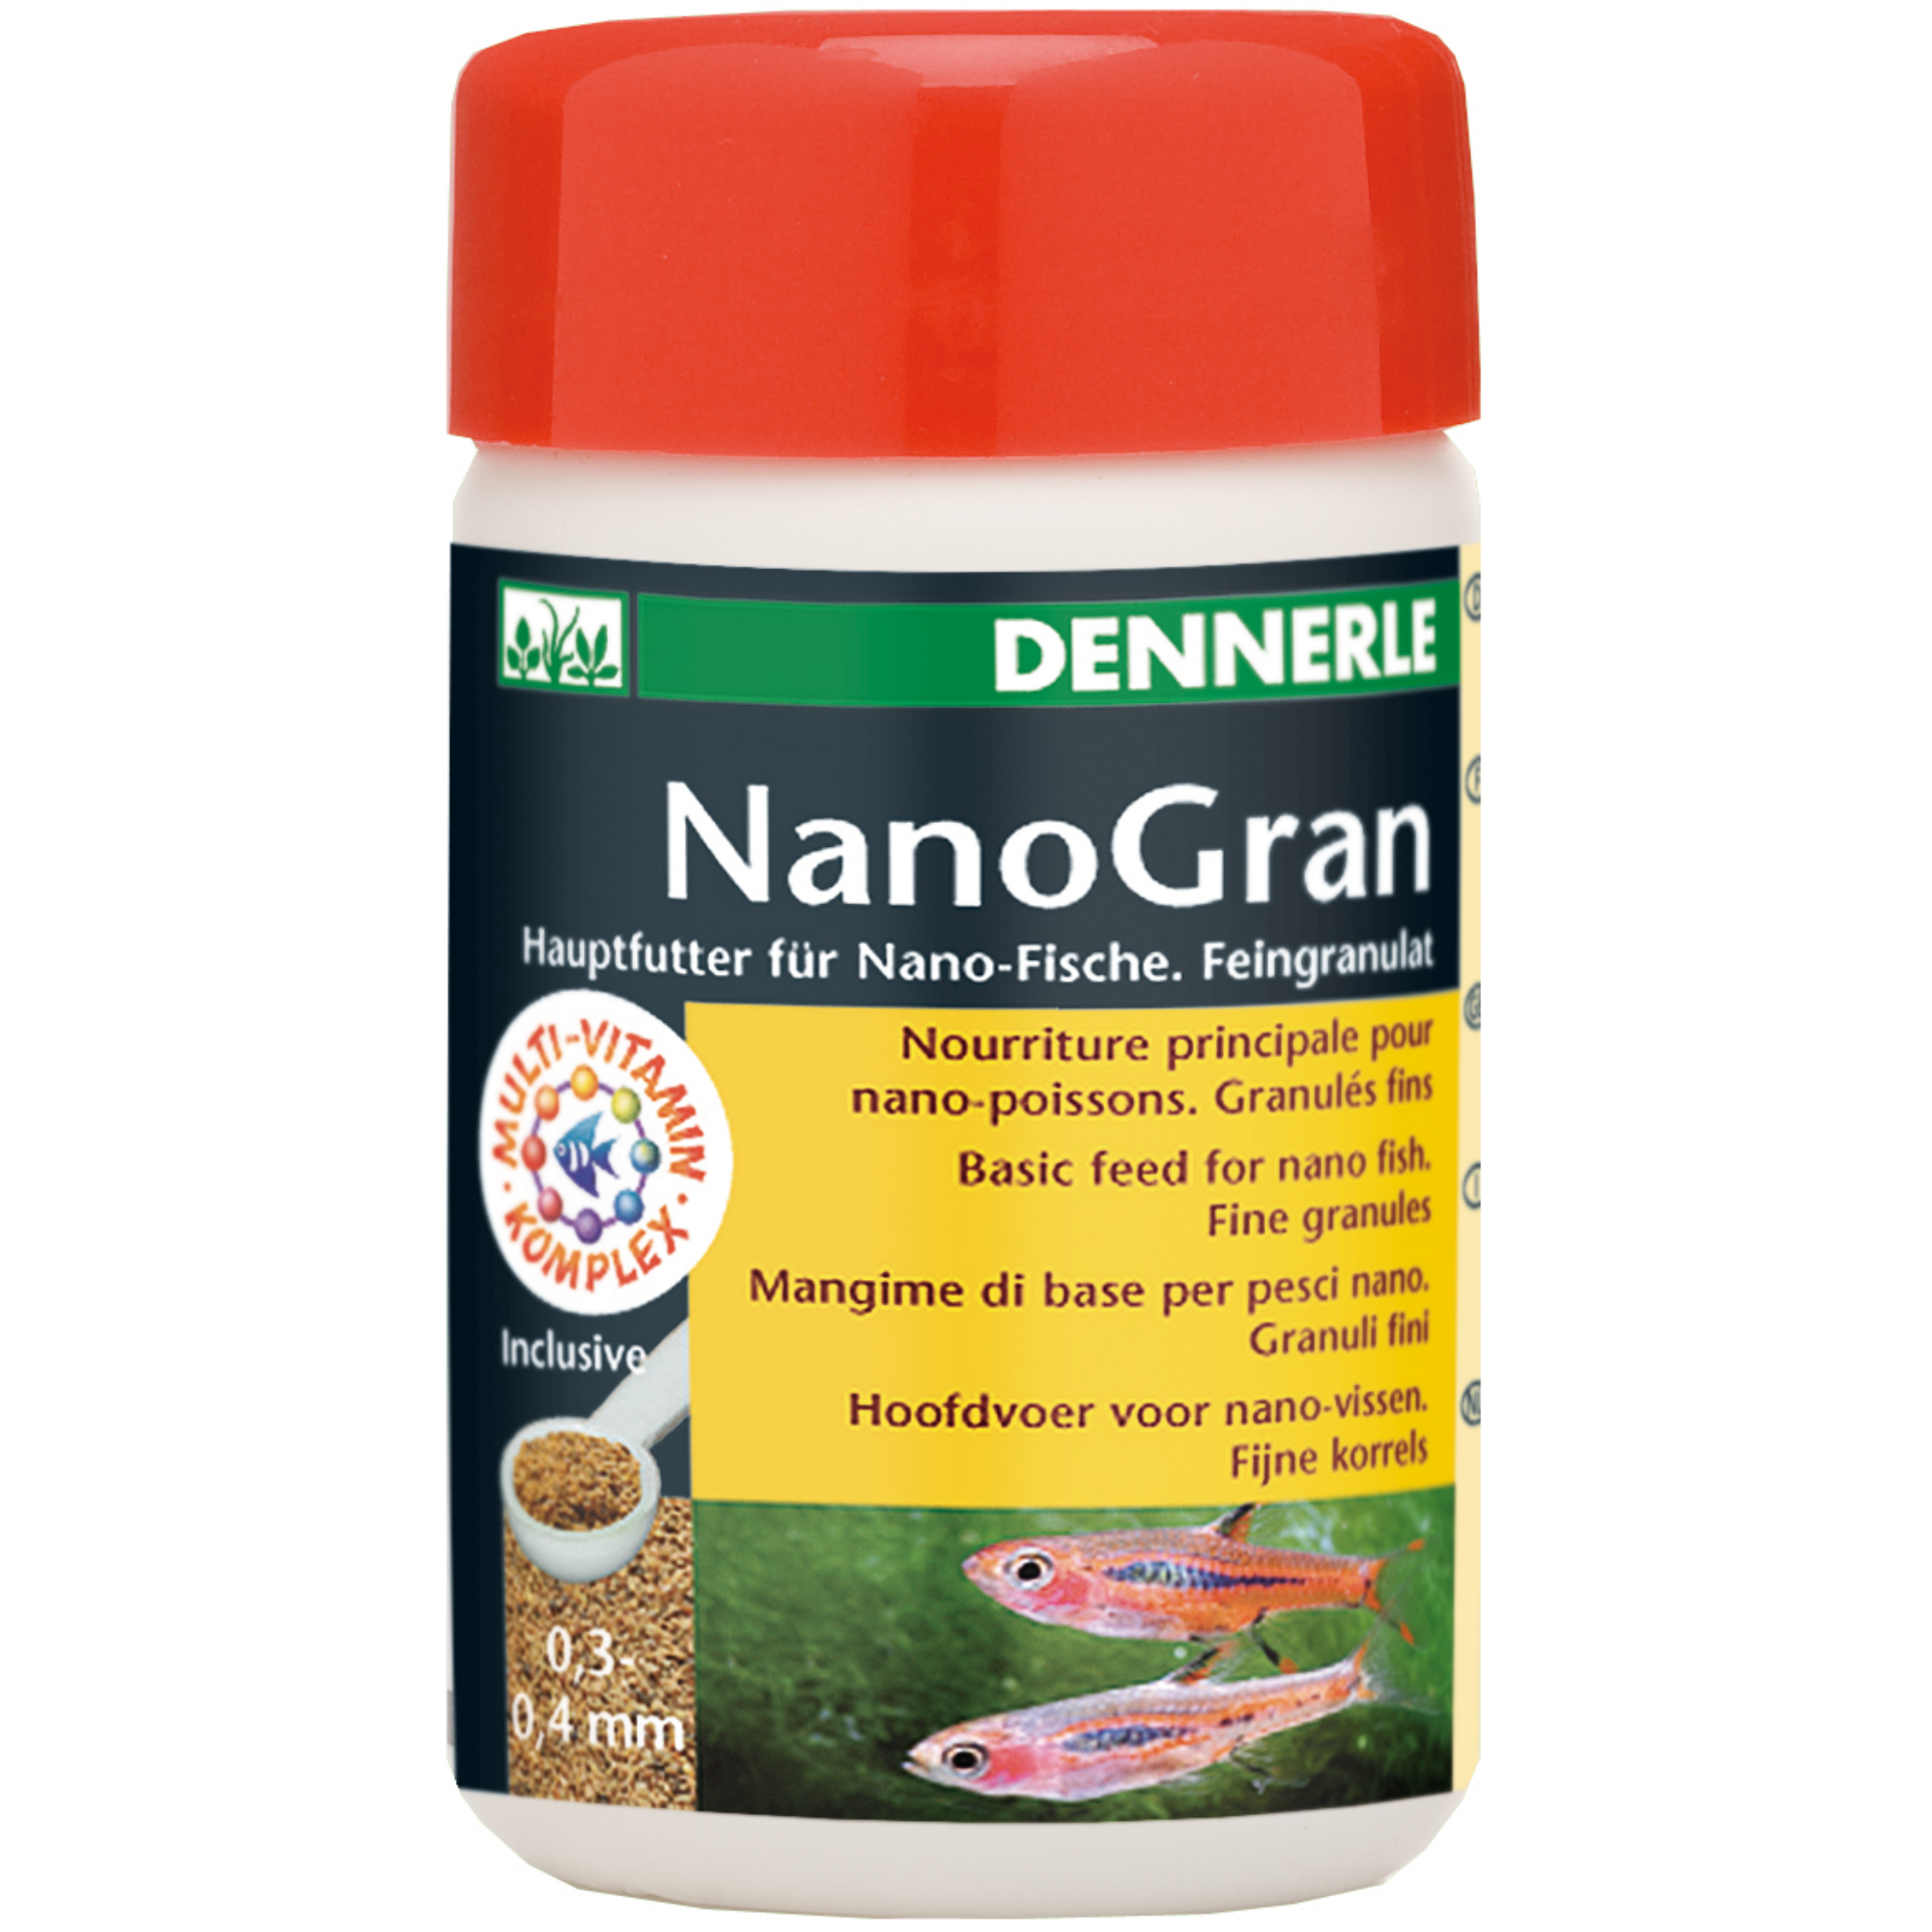 Feingranulat NanoGran 55 g + product picture